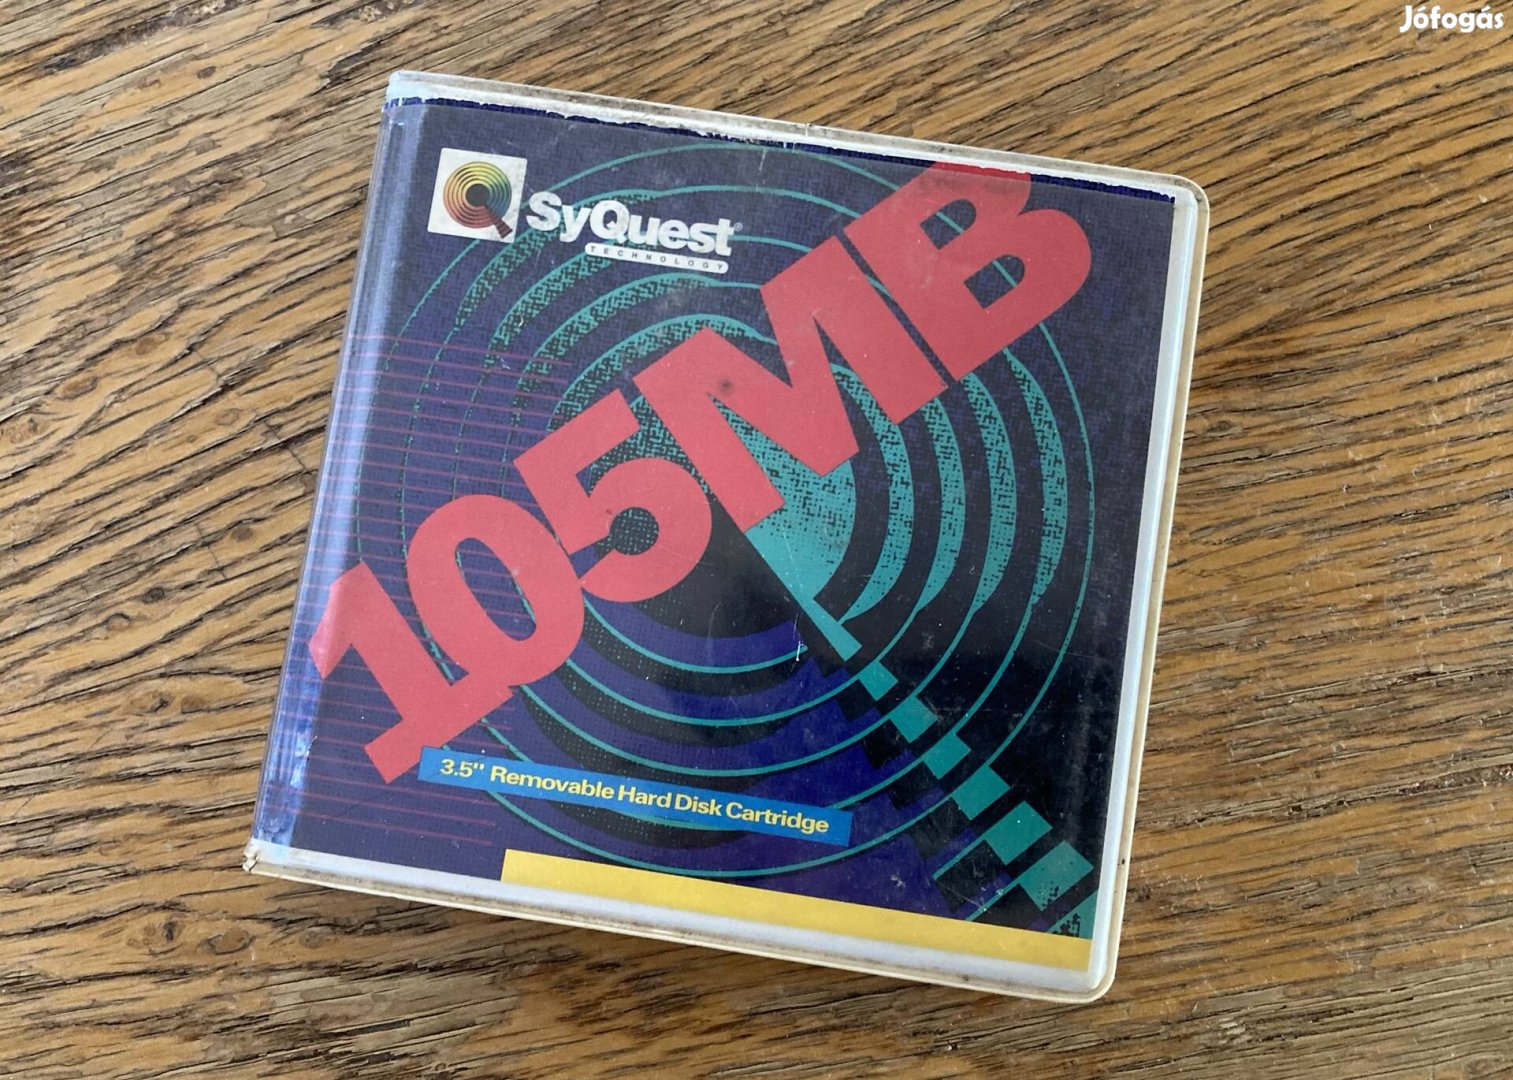 Syquest 105 MB 3.5" Temovable Hard Disc Cartridge - adattároló